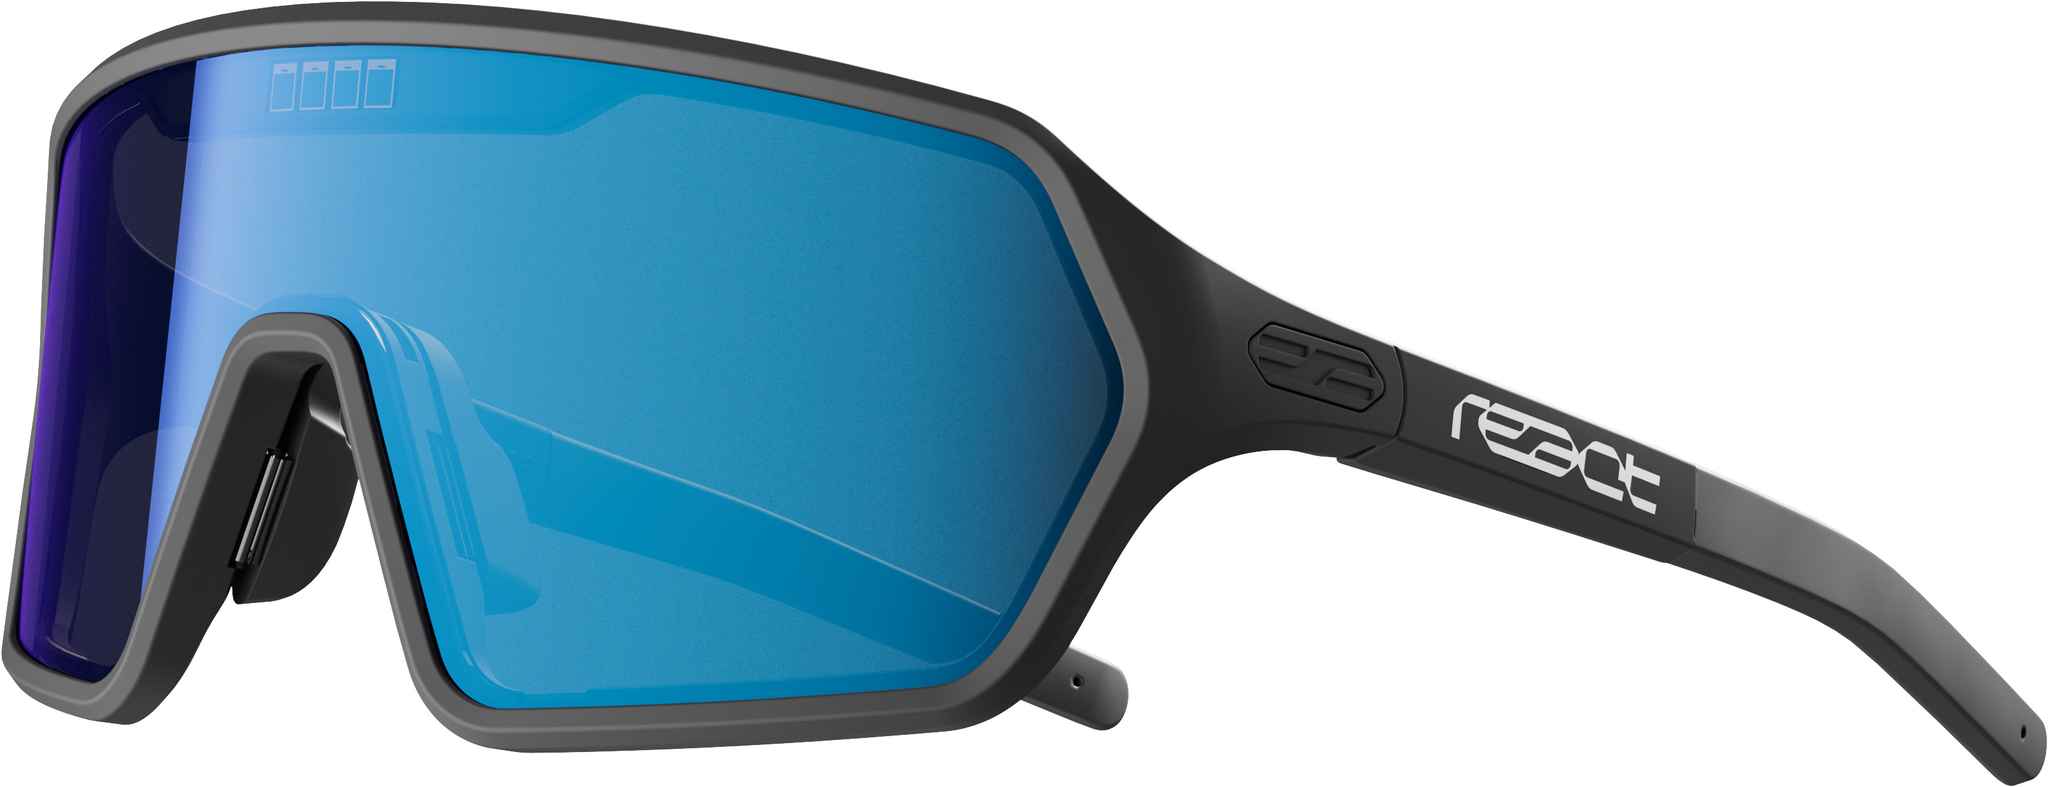 REV Sportbrille , sky black - Hauptansicht